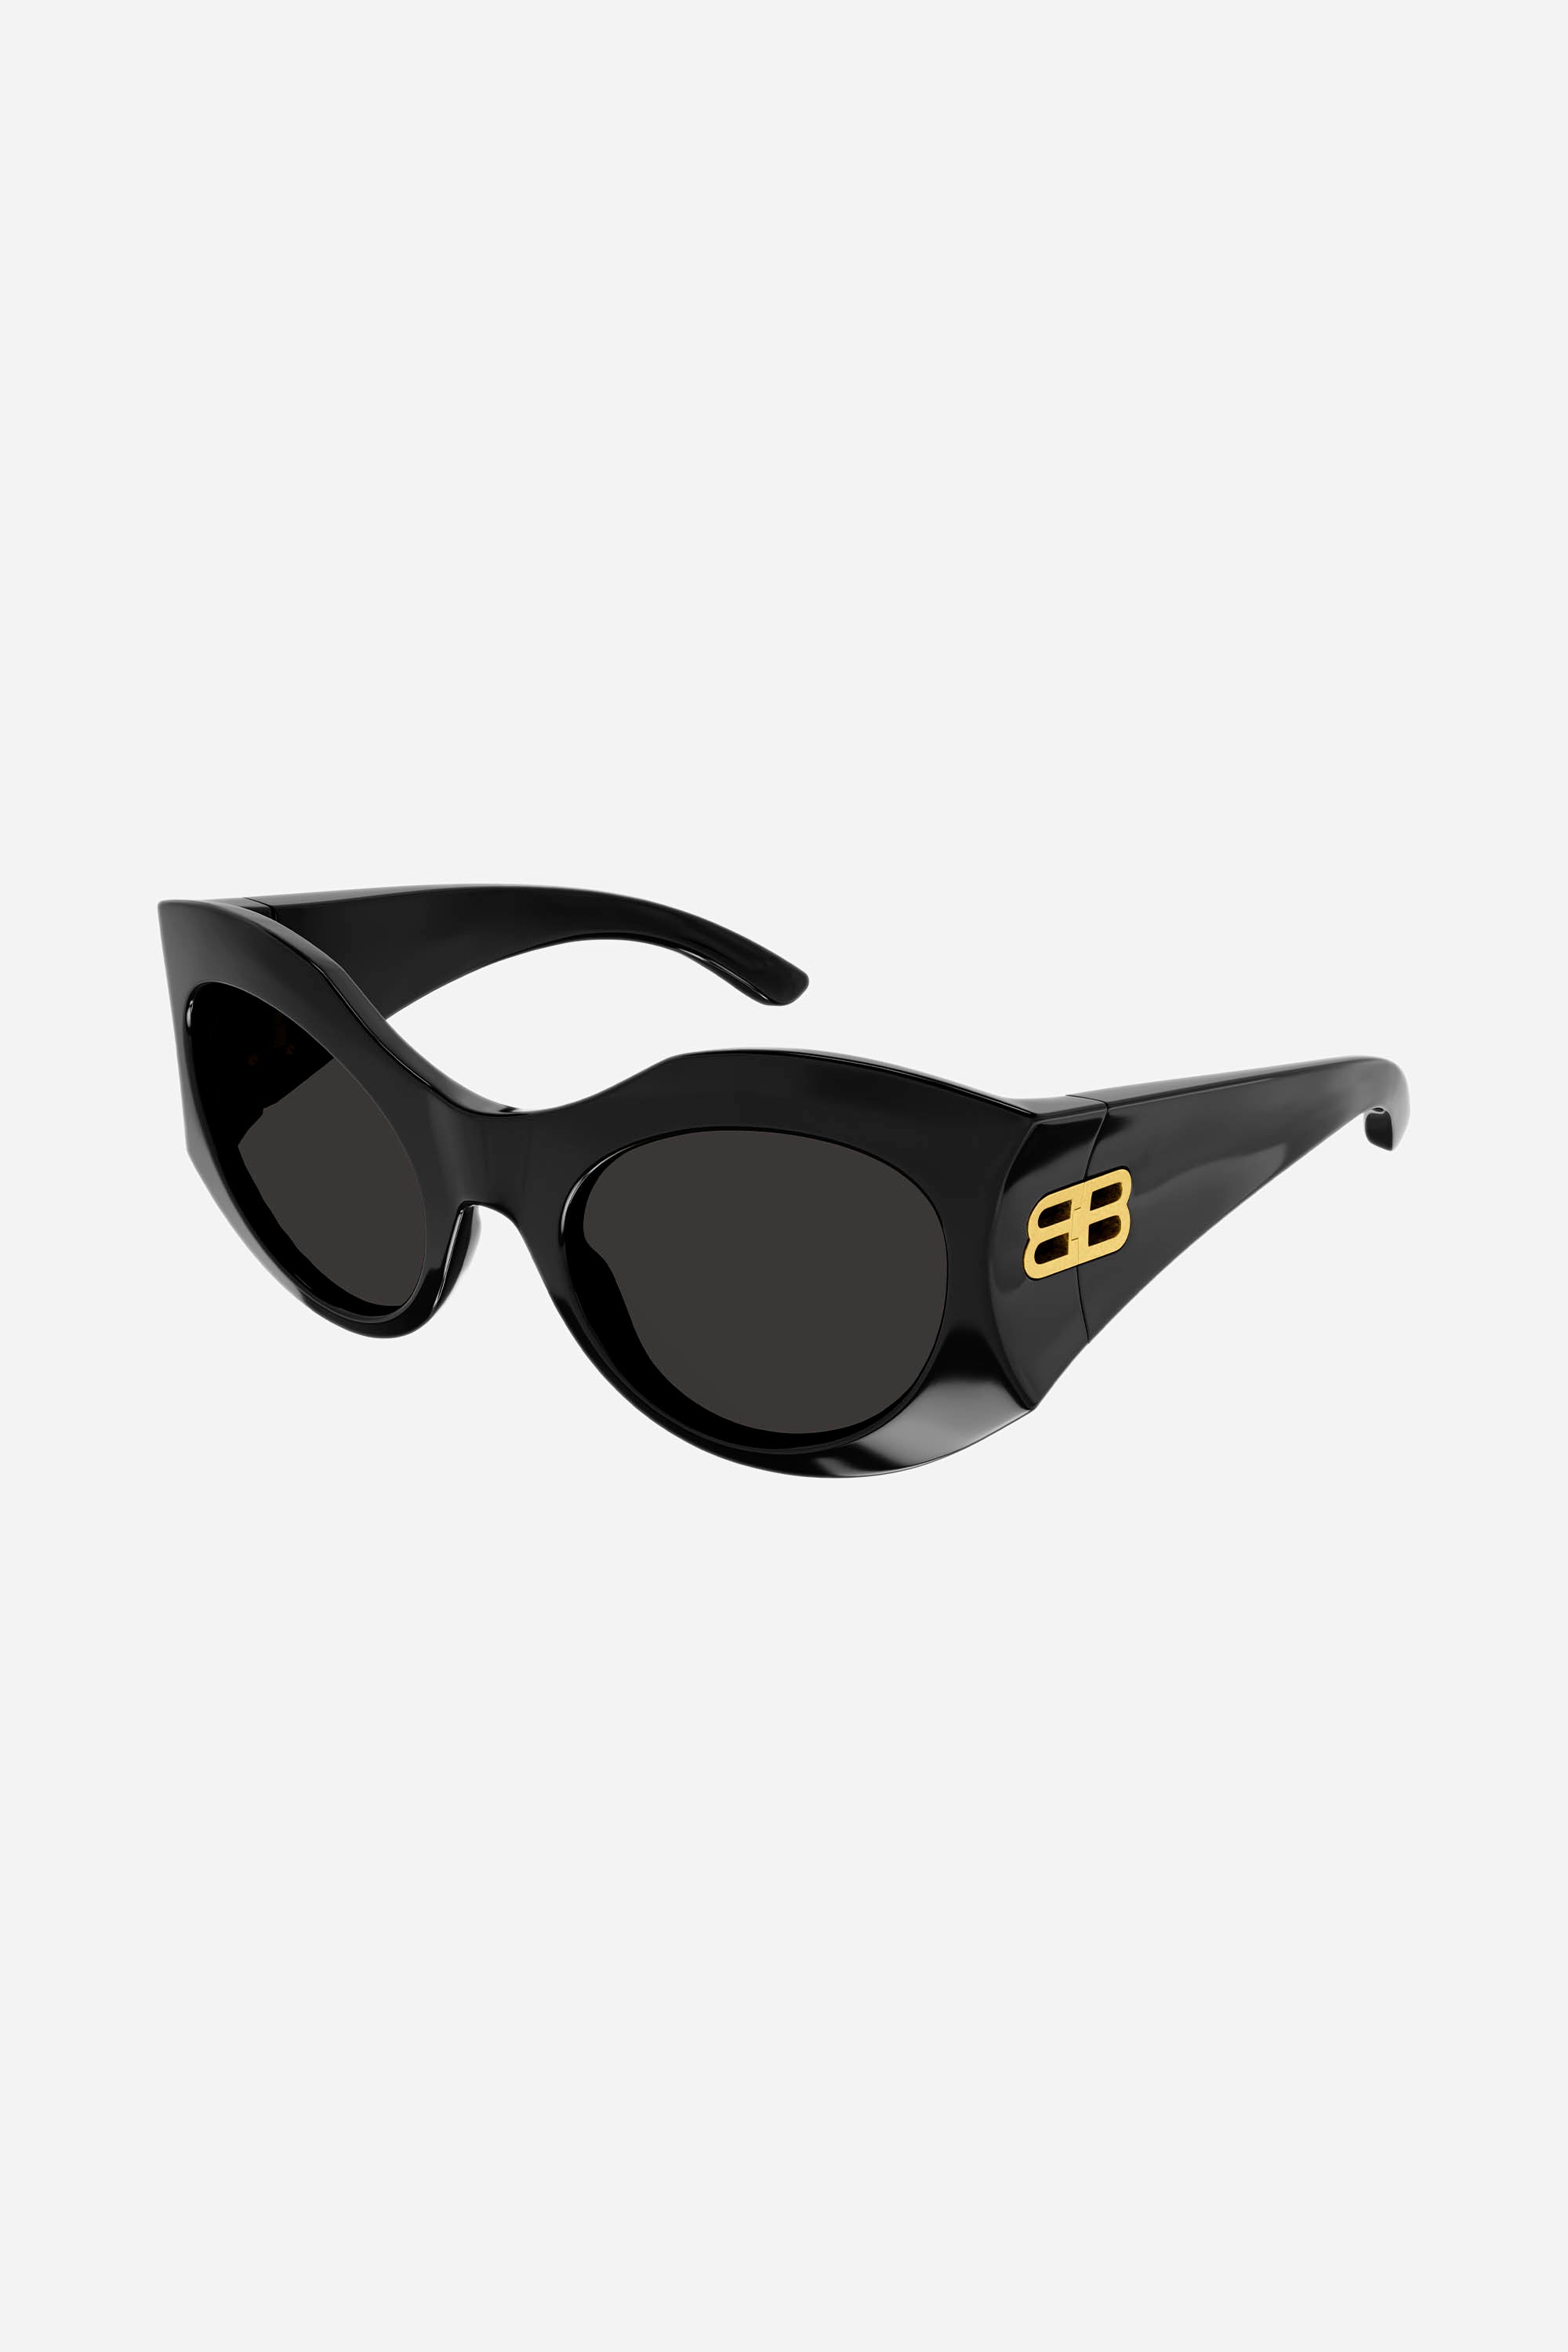 Balenciaga hourglass round sunglasses in black - Eyewear Club